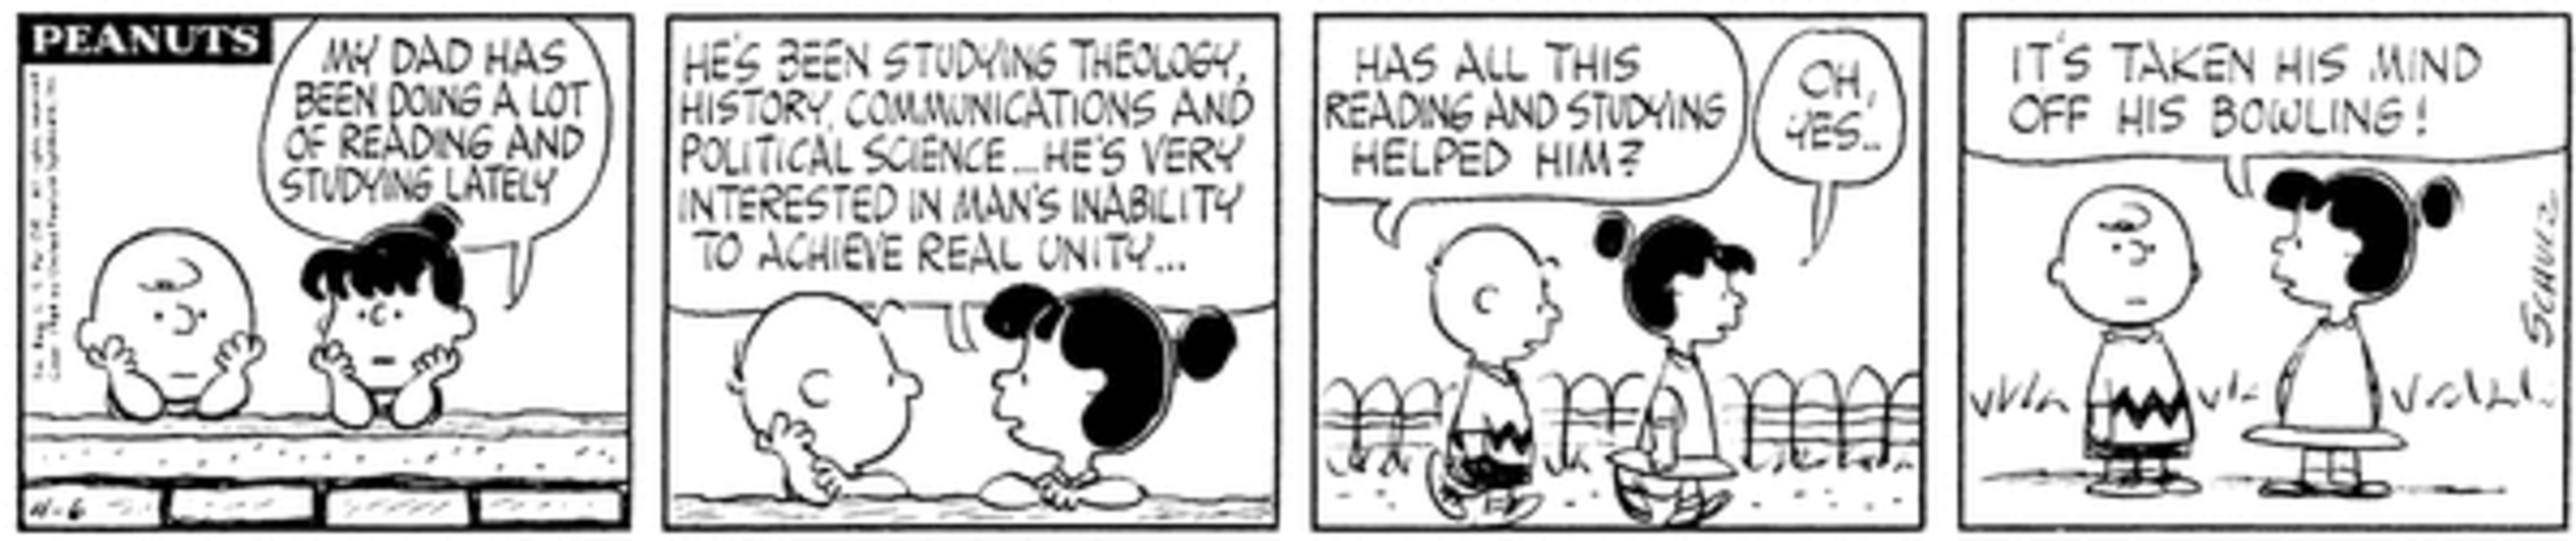 Charlie Brown and Violet in Peanuts.